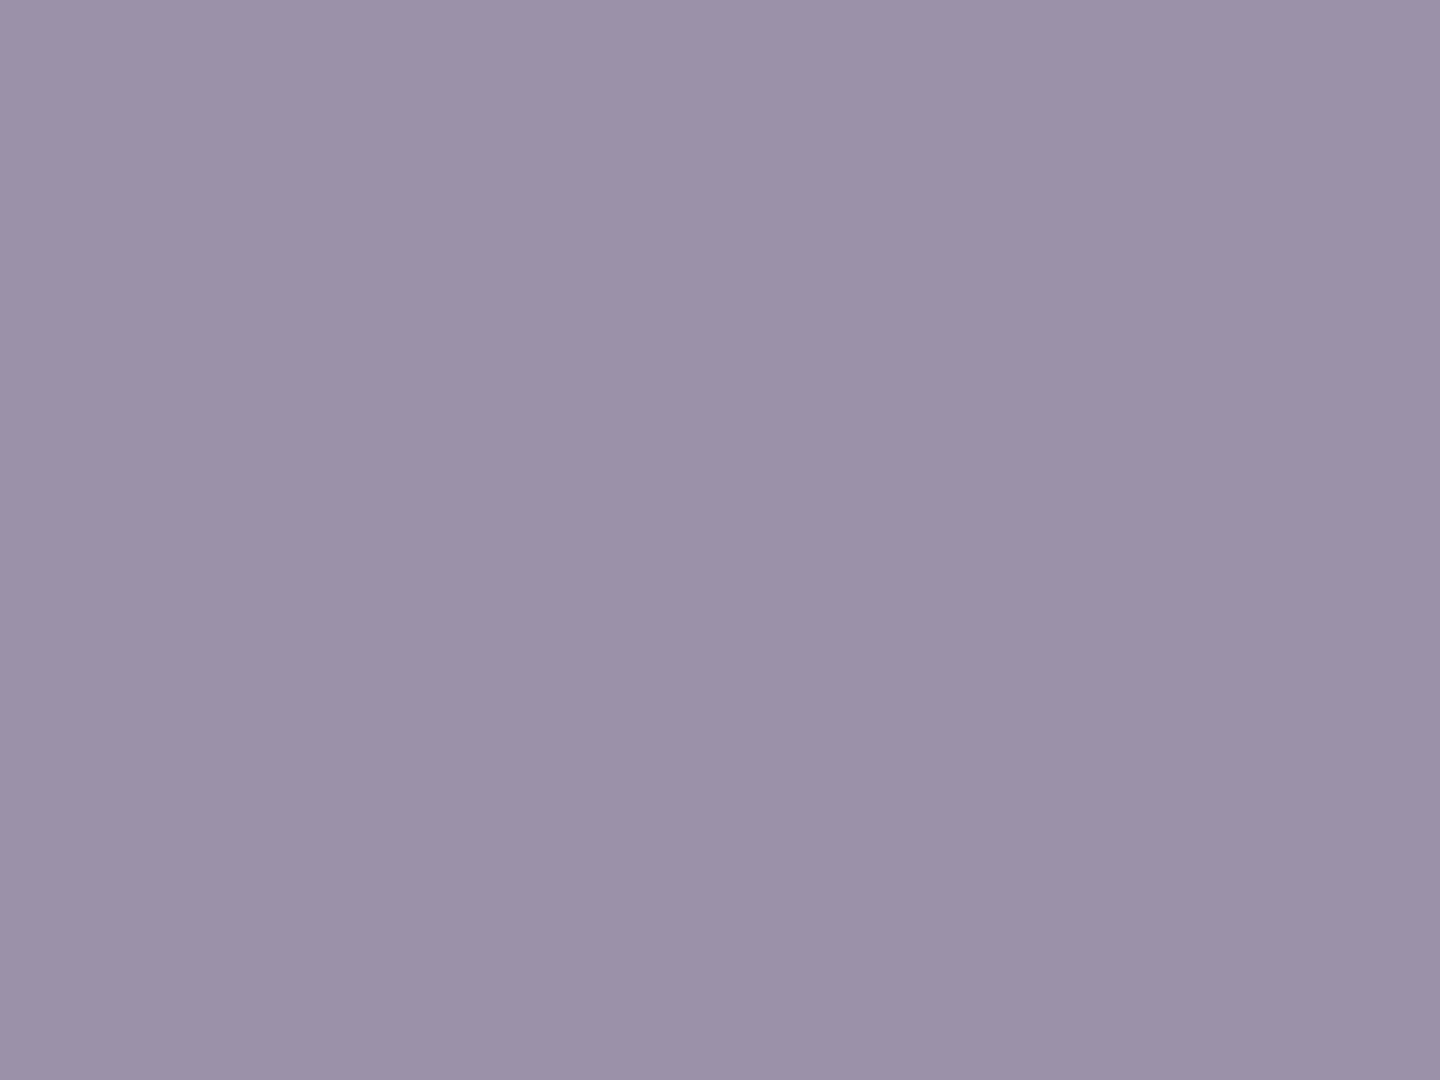 Tyynyliina Nejd Percale - Dusty Lilac